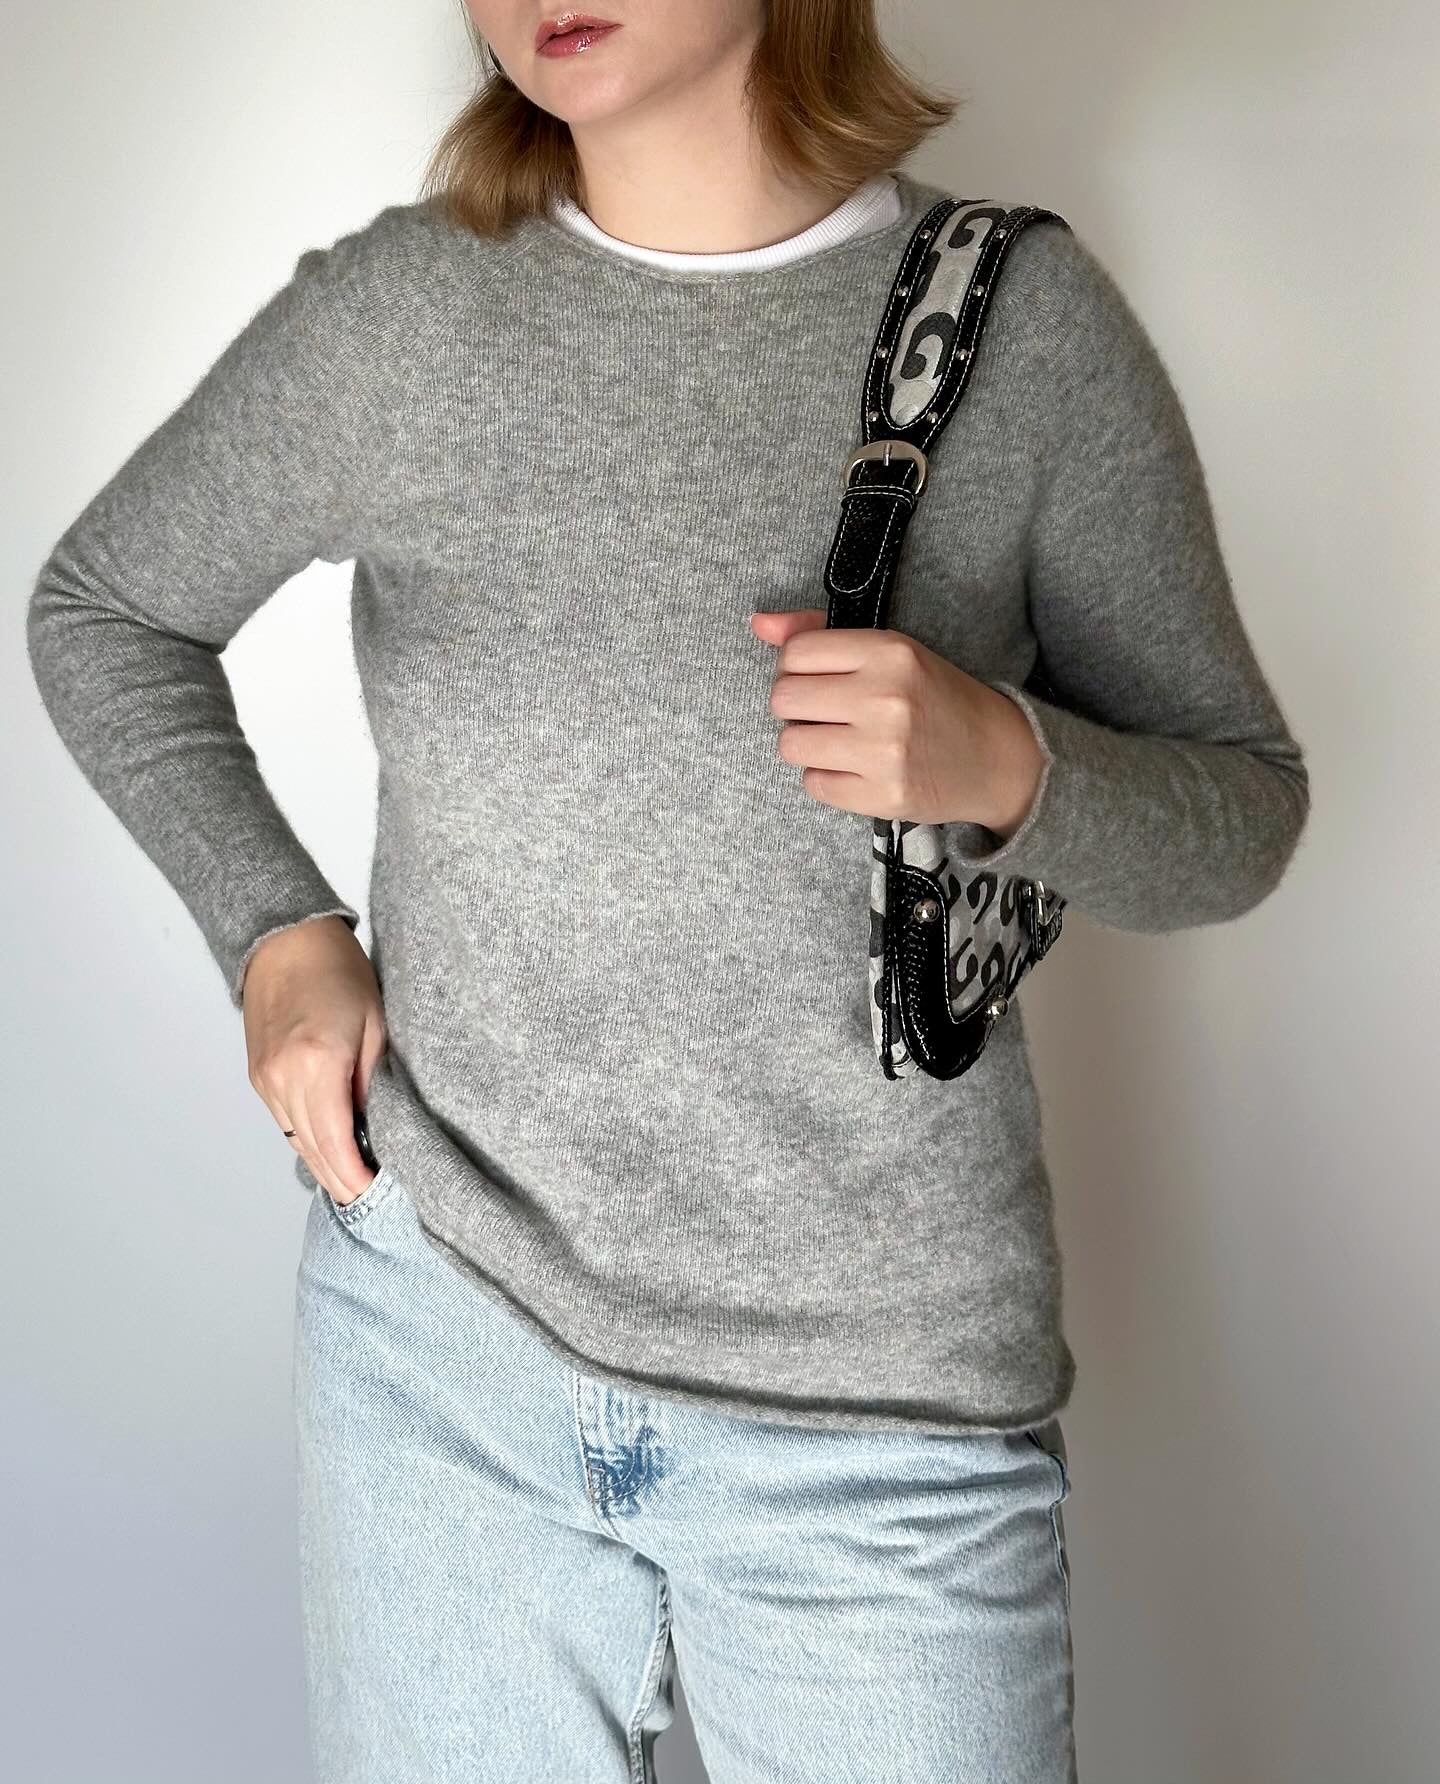 Stunning vintage cashmere jumper by Lamberto Losani 💔